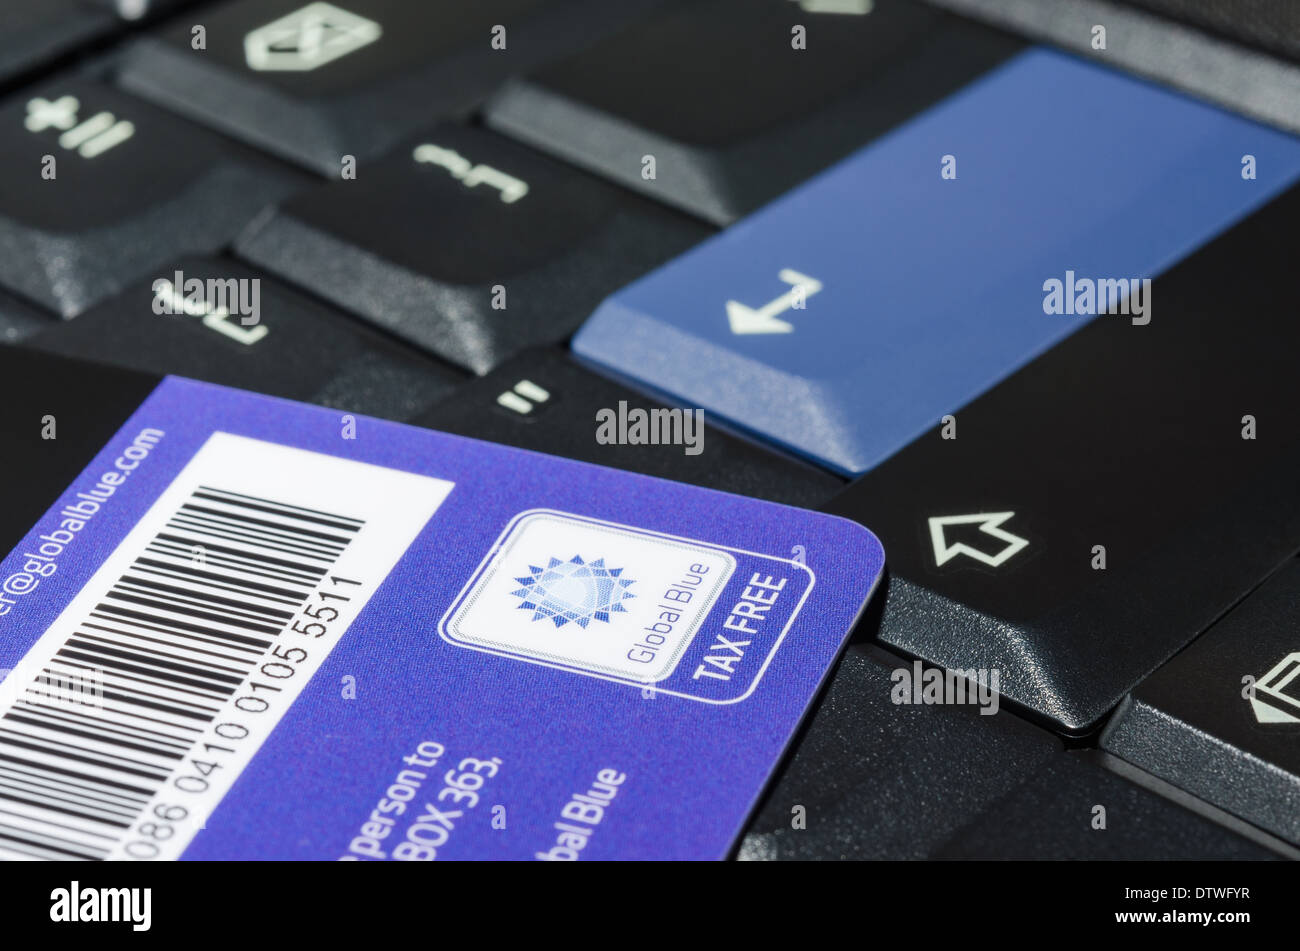 MUNICH, GERMANY - FEBRUARY 24, 2014: Tax free company Global Blue card on black notebook keyboard. Stock Photo